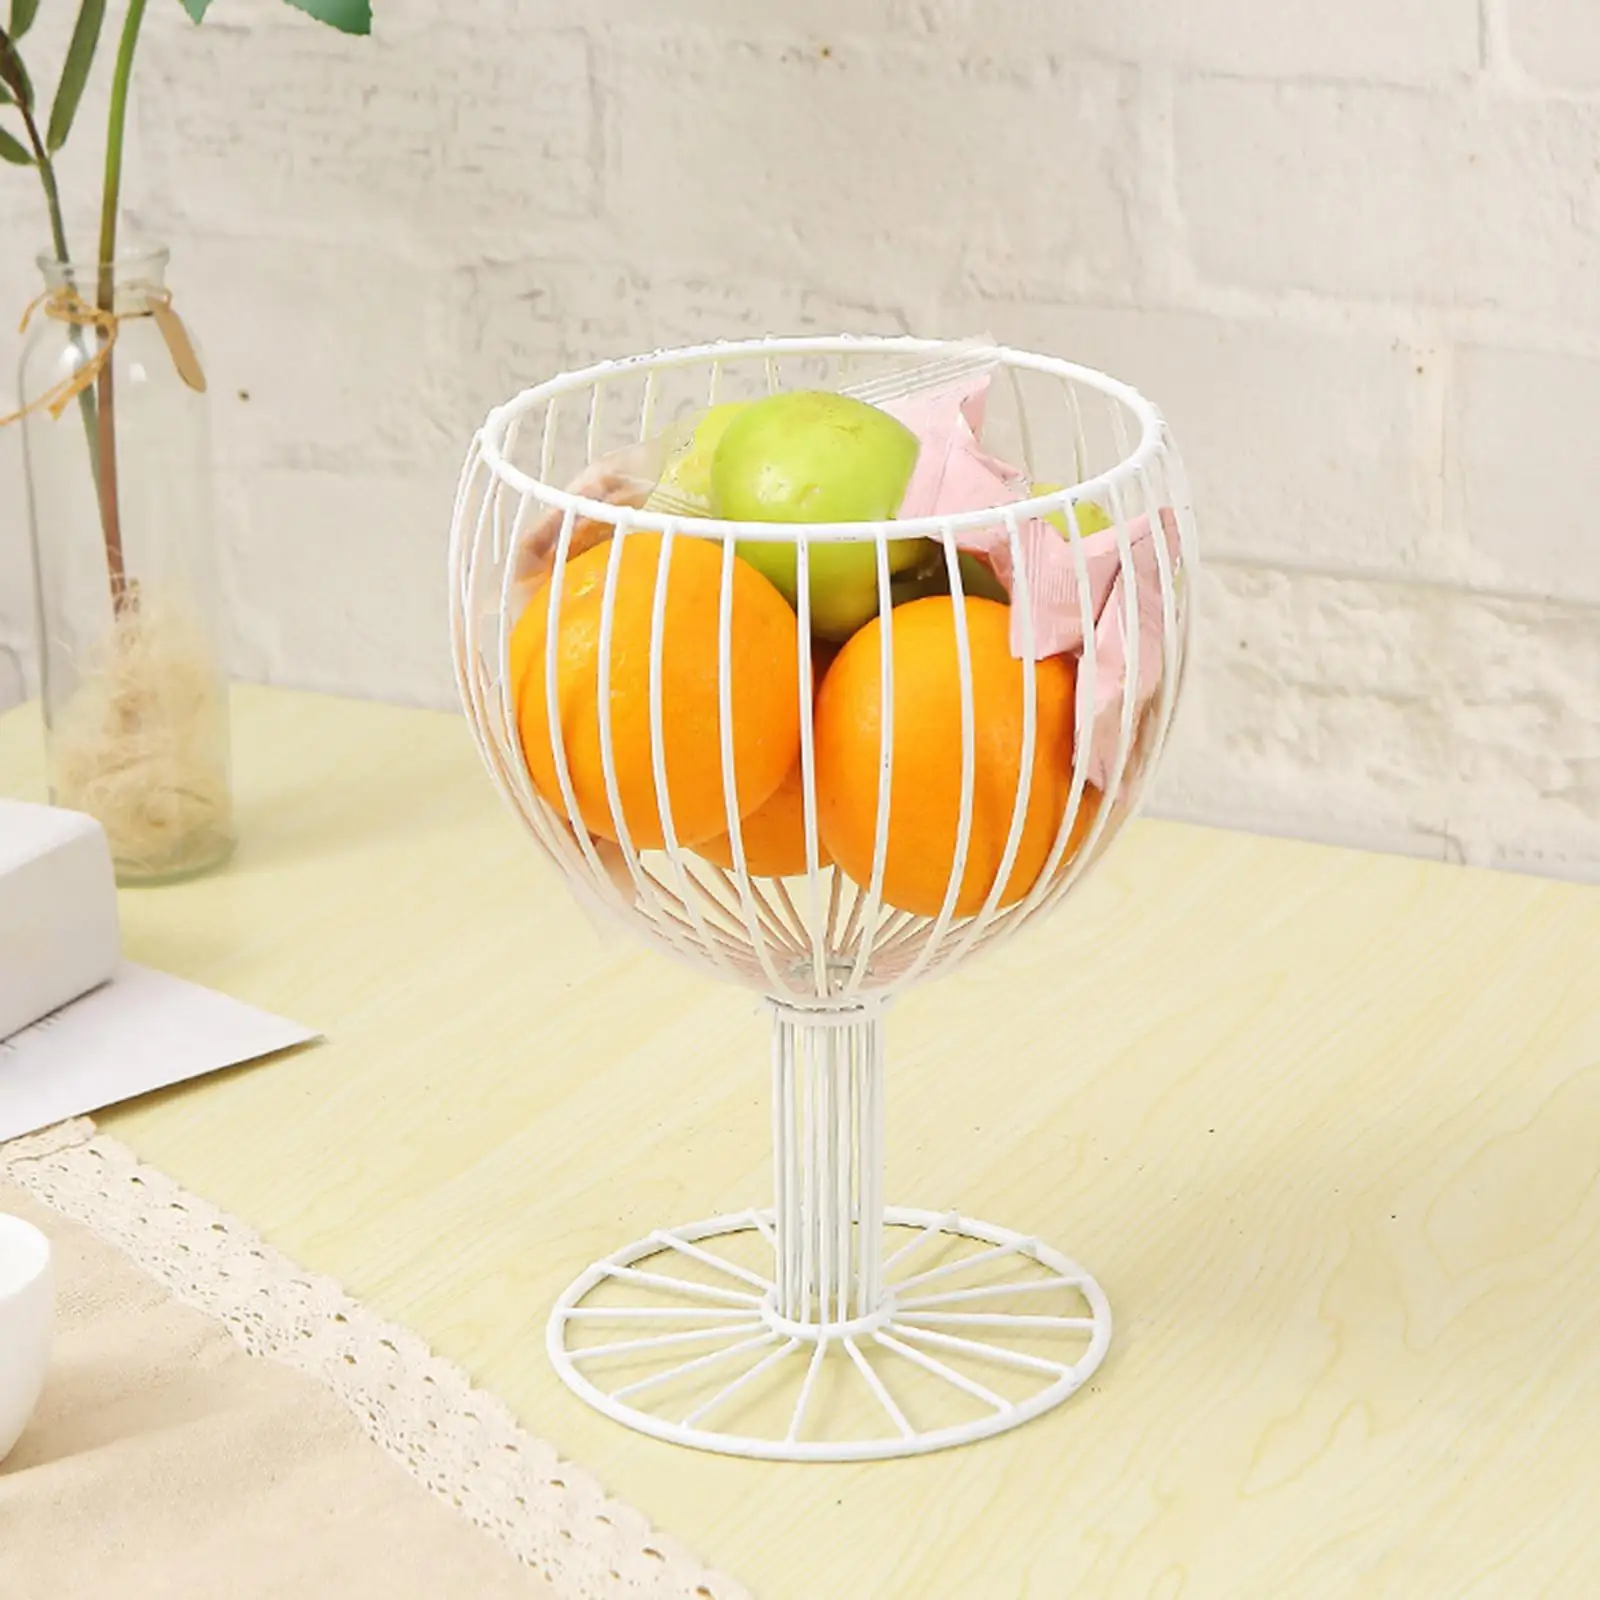 Iron Art Fruit Basket Bowl Wine Glass Shape Fruits and Veggies Holder Serving Bowl Storage Baskets for Centrepieces Decoration